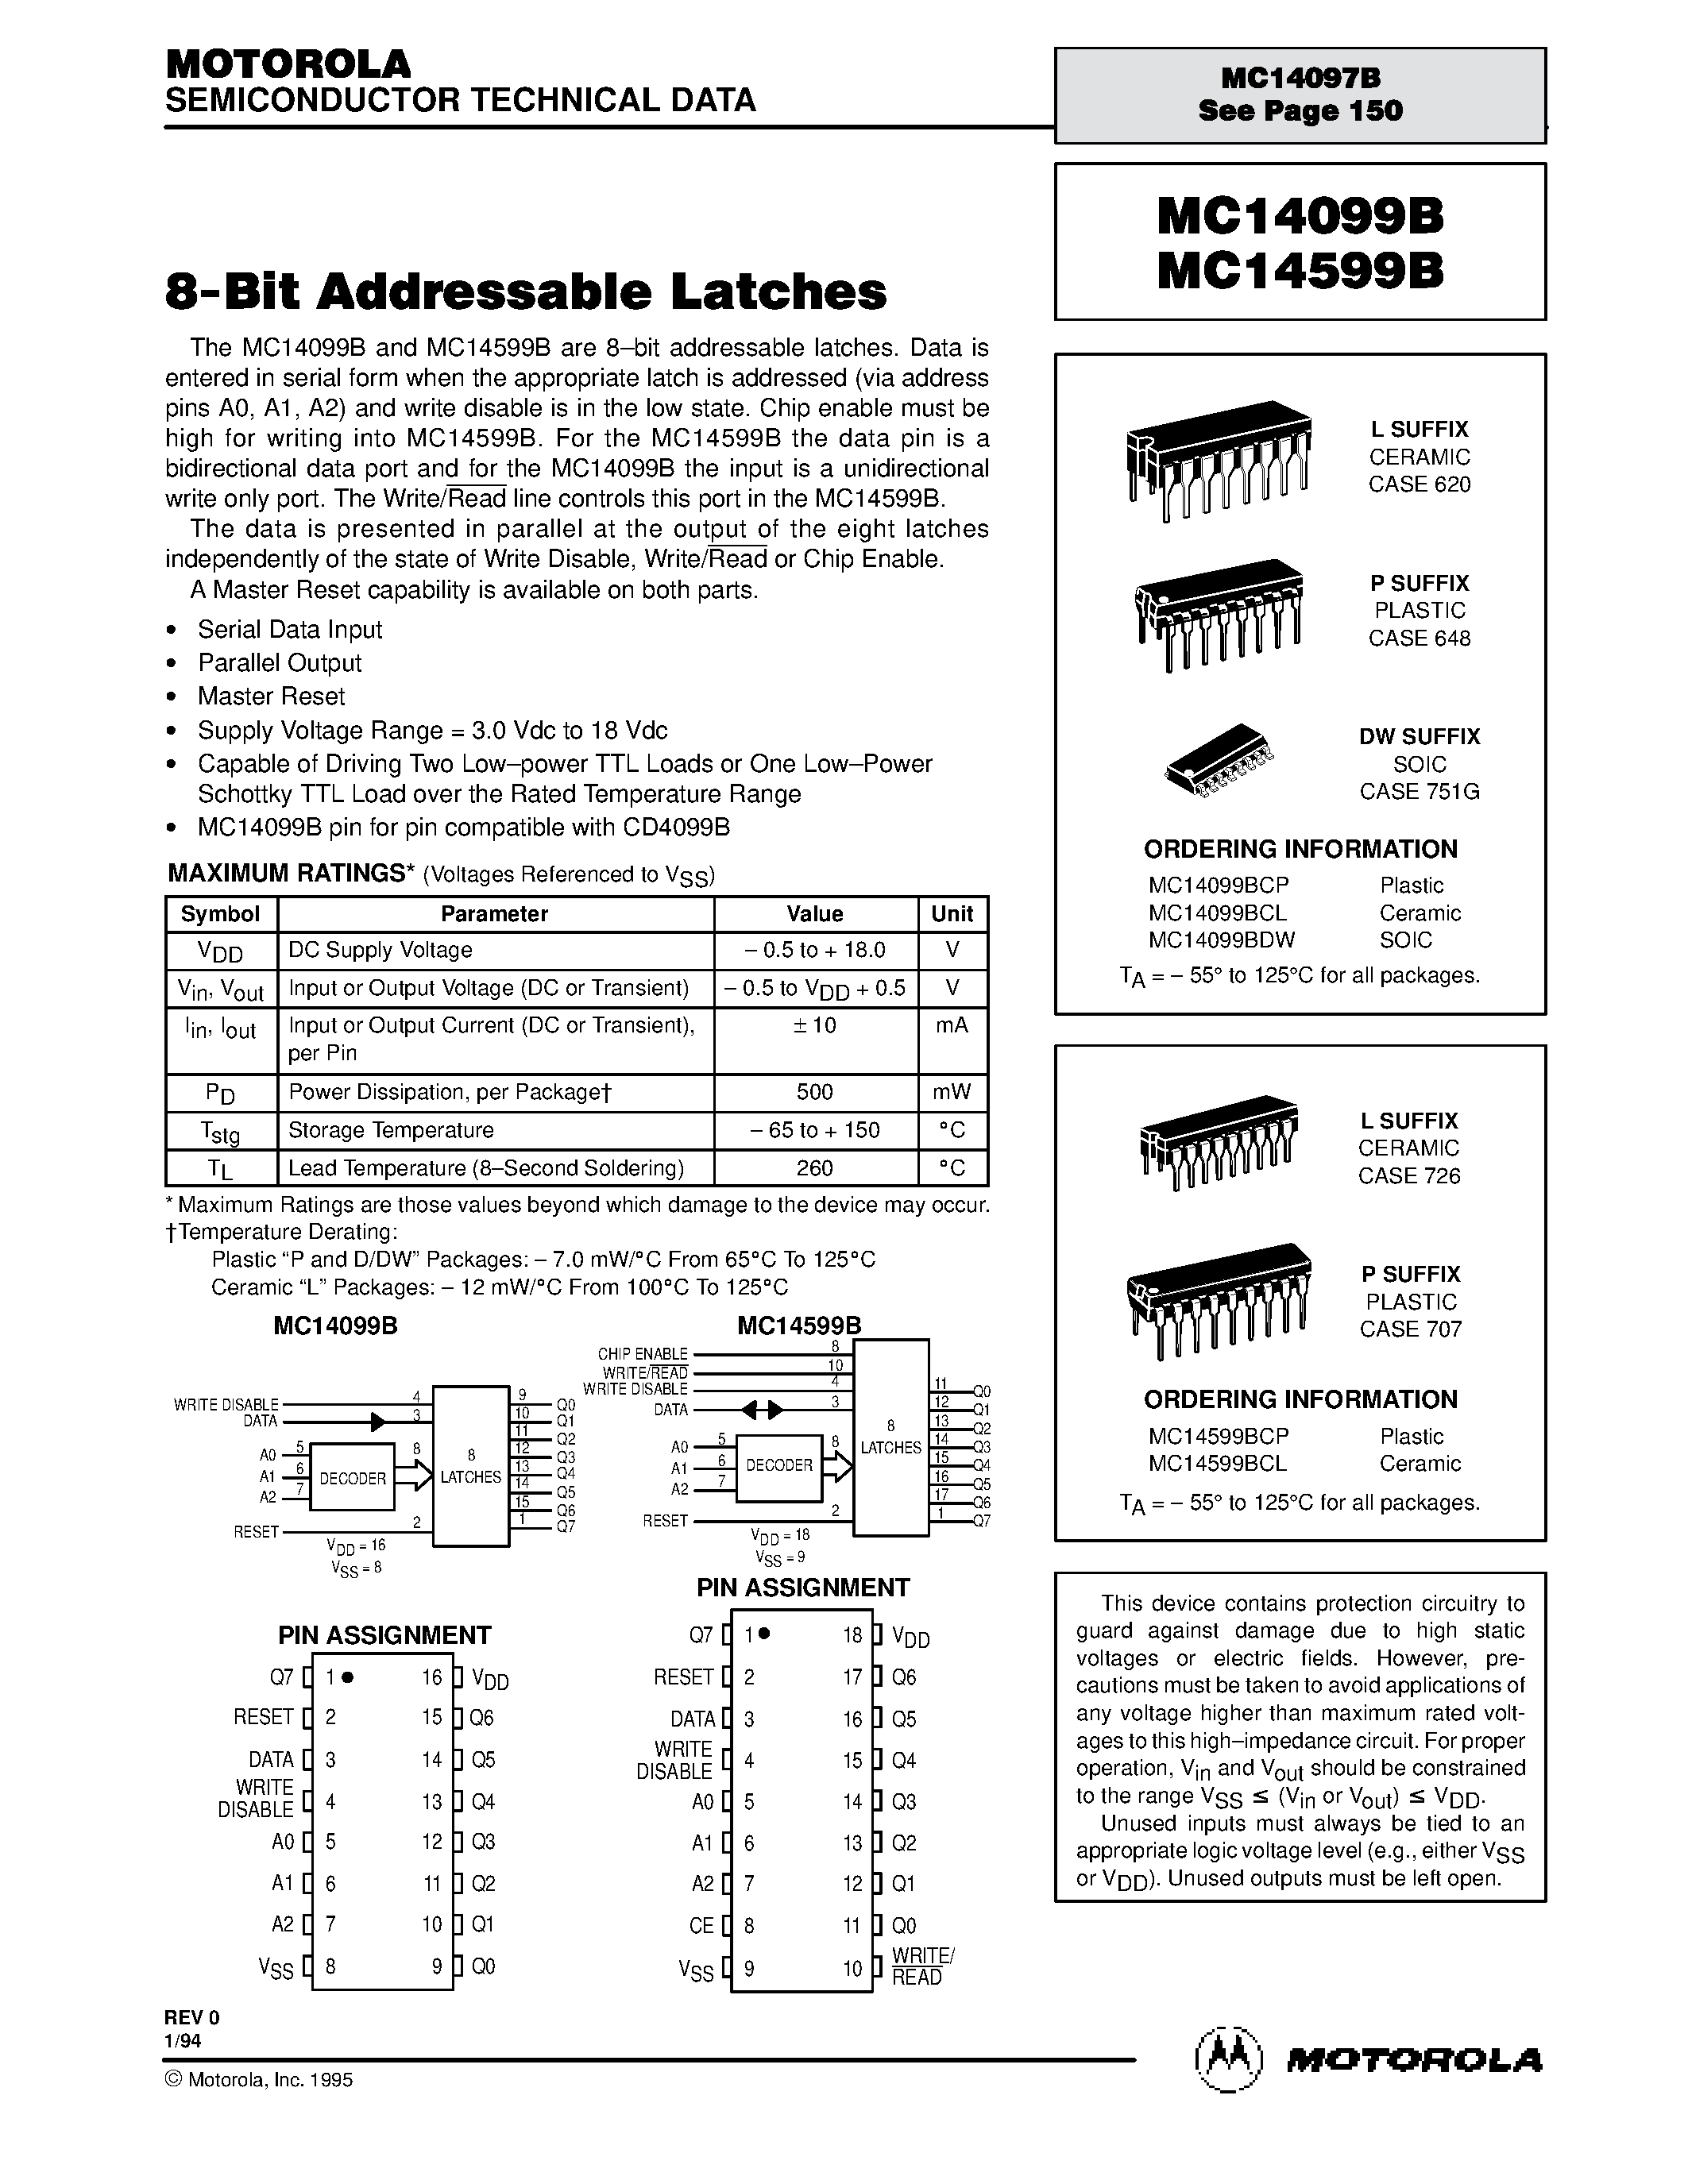 Datasheet MC14099B - (MC14599B / MC14099B) 8-Bit Addressable Latches page 1